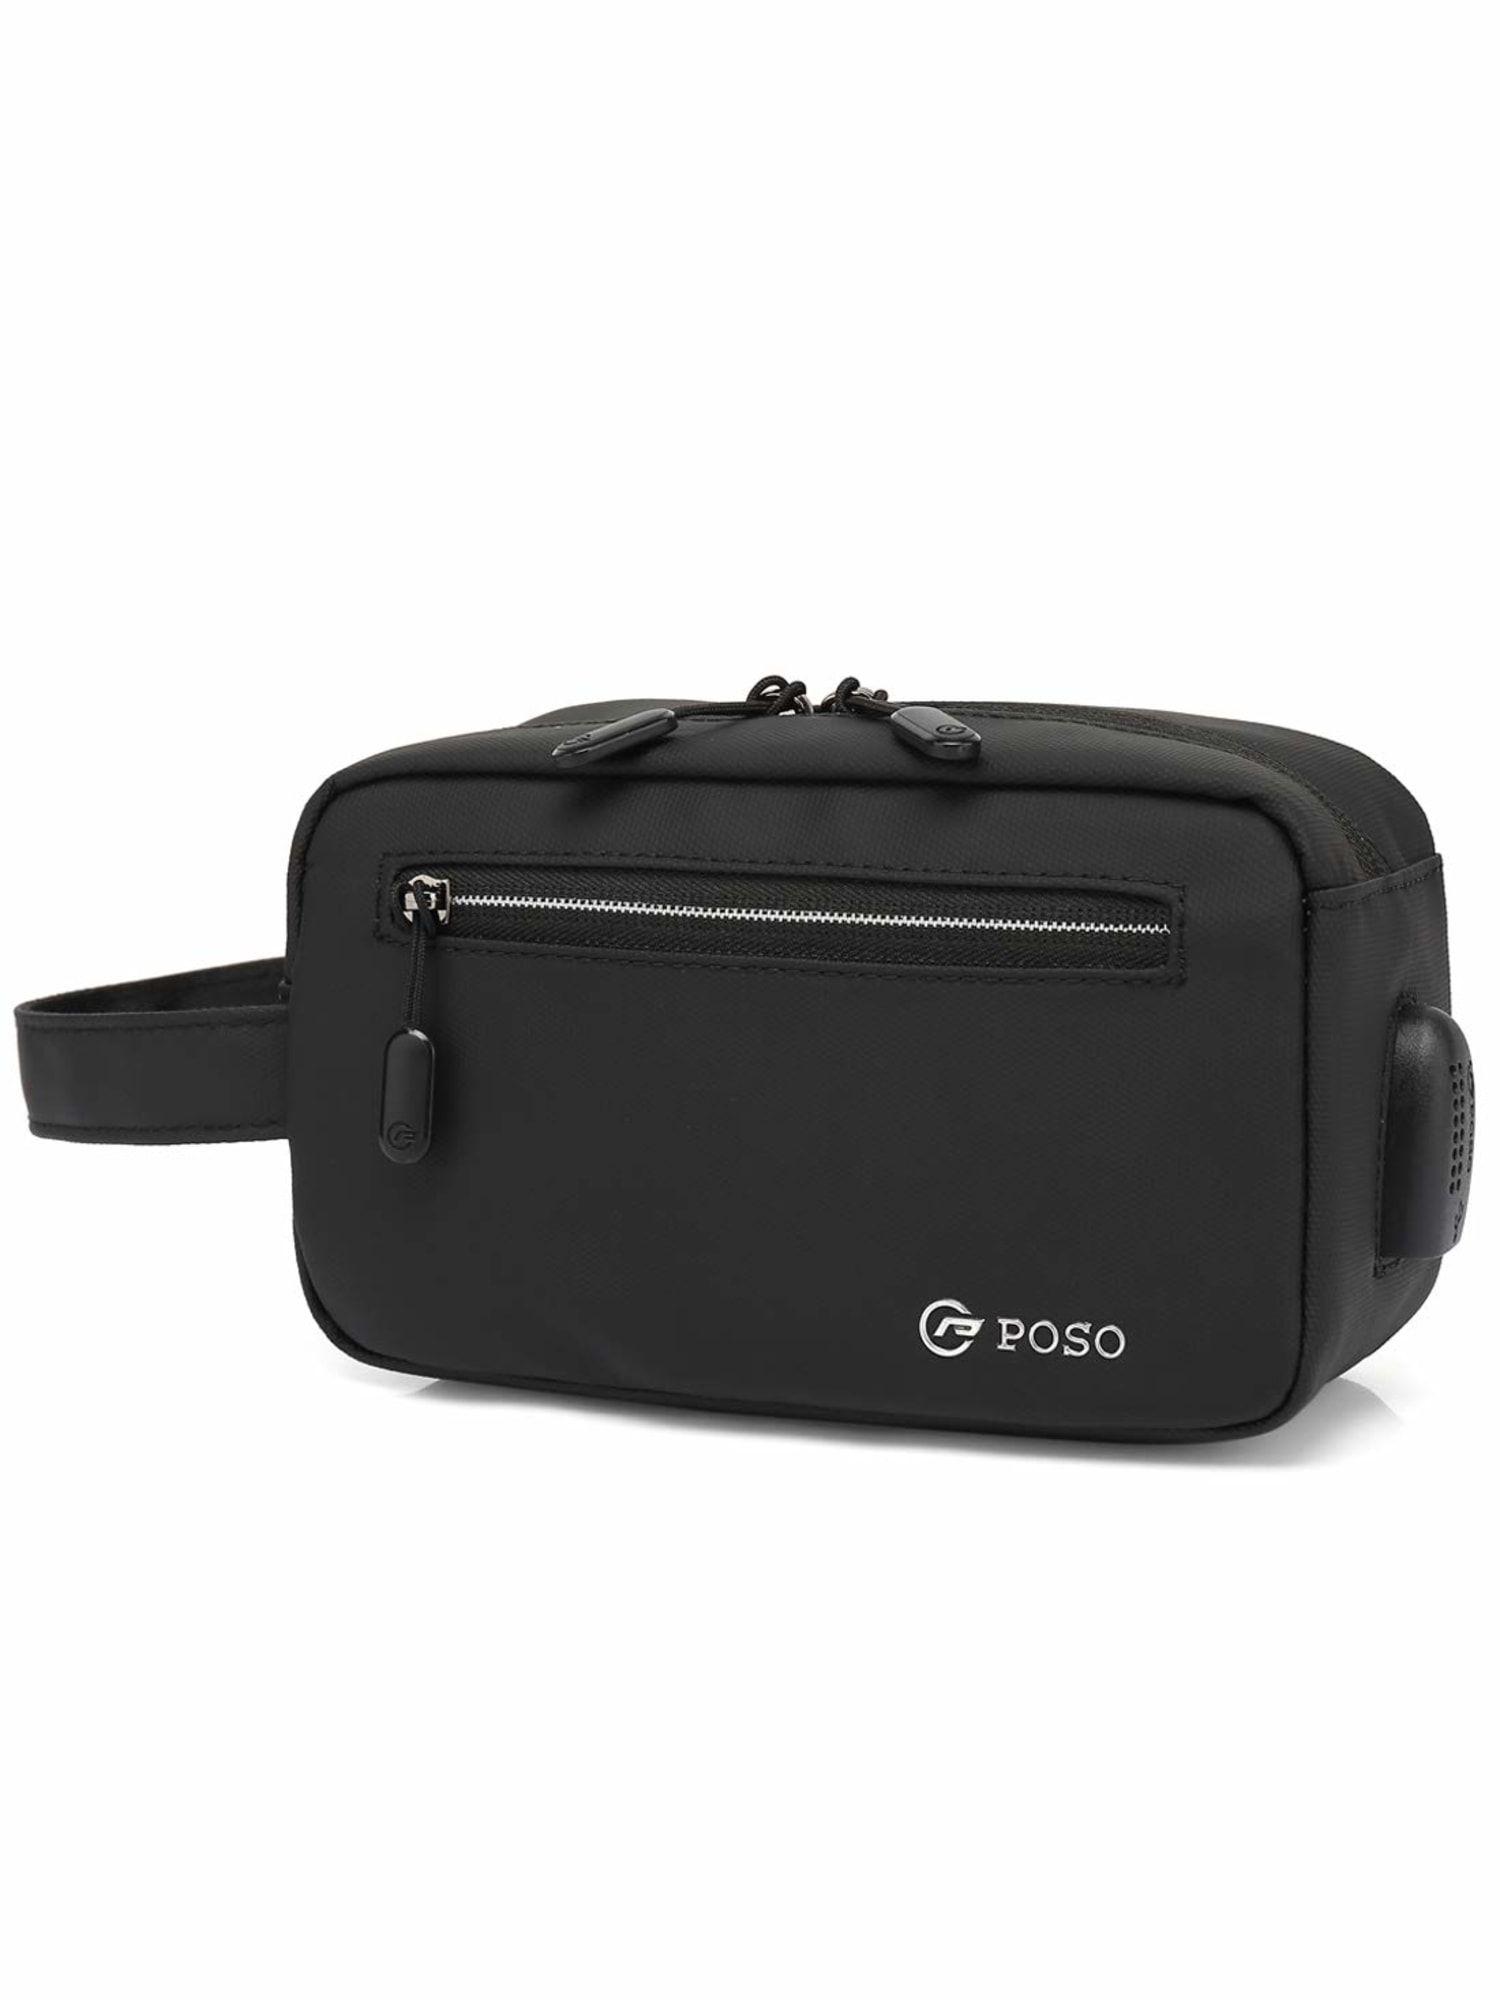 multipurpose travel pouch/wrist handbag with usb - black